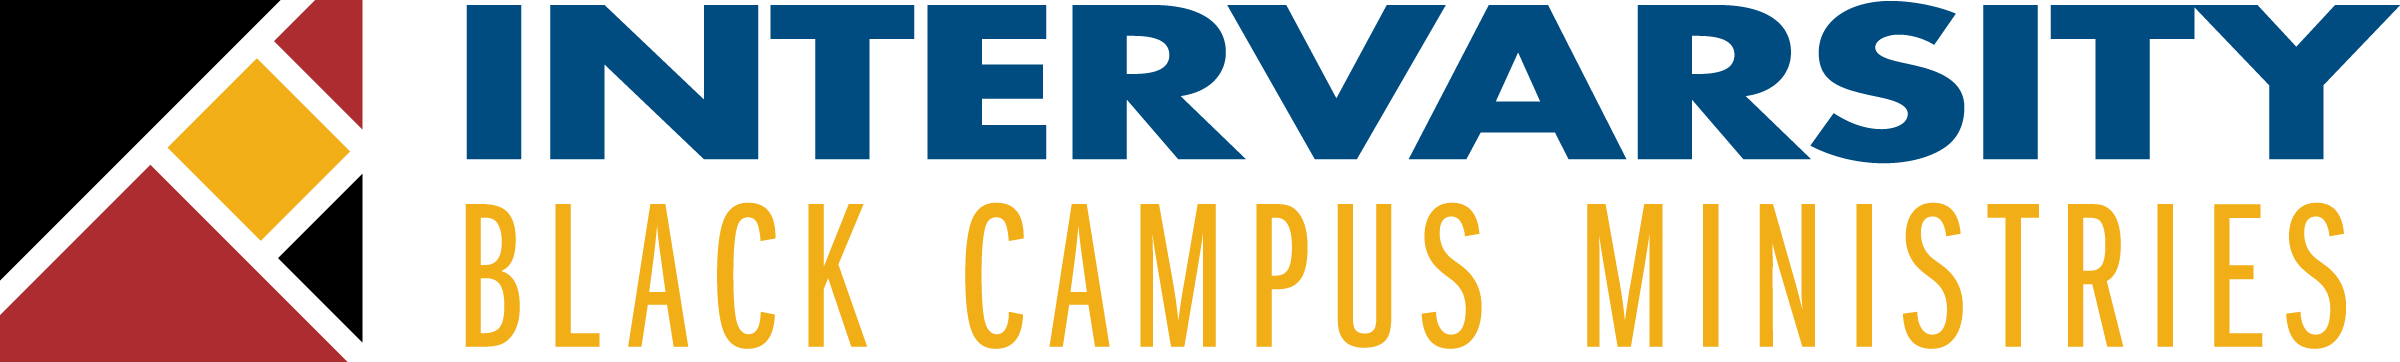 Black Campus Ministries Logo.